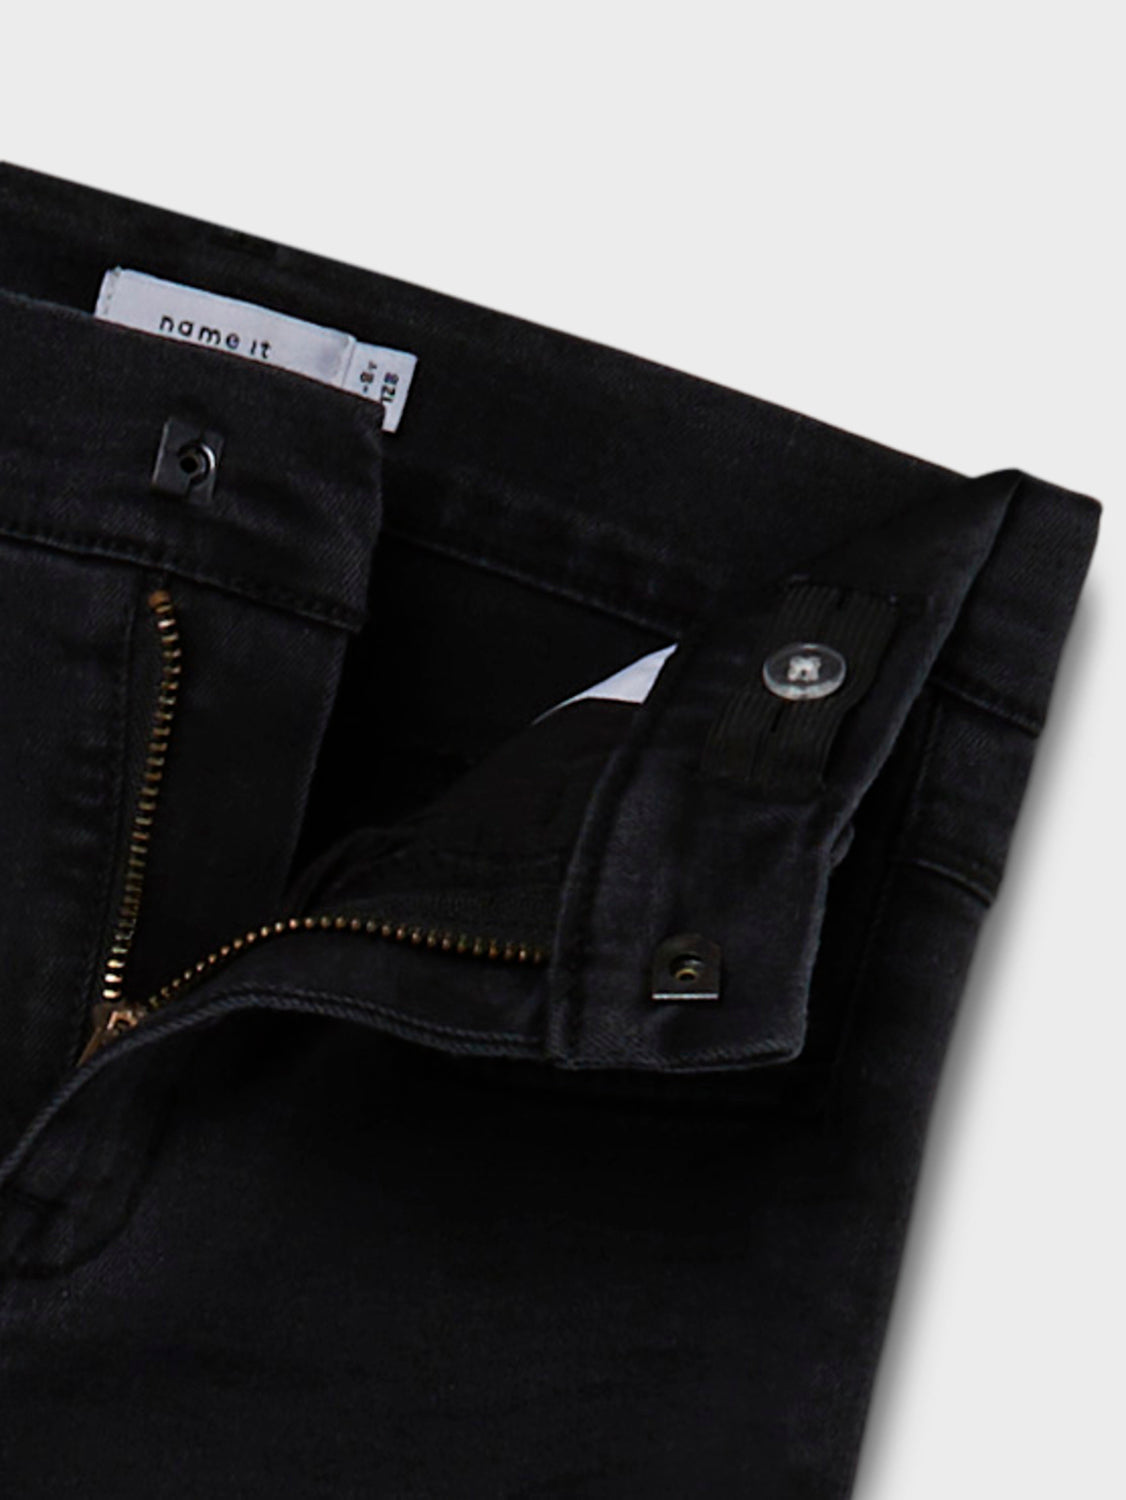 NKFROSE Jeans - Black Denim